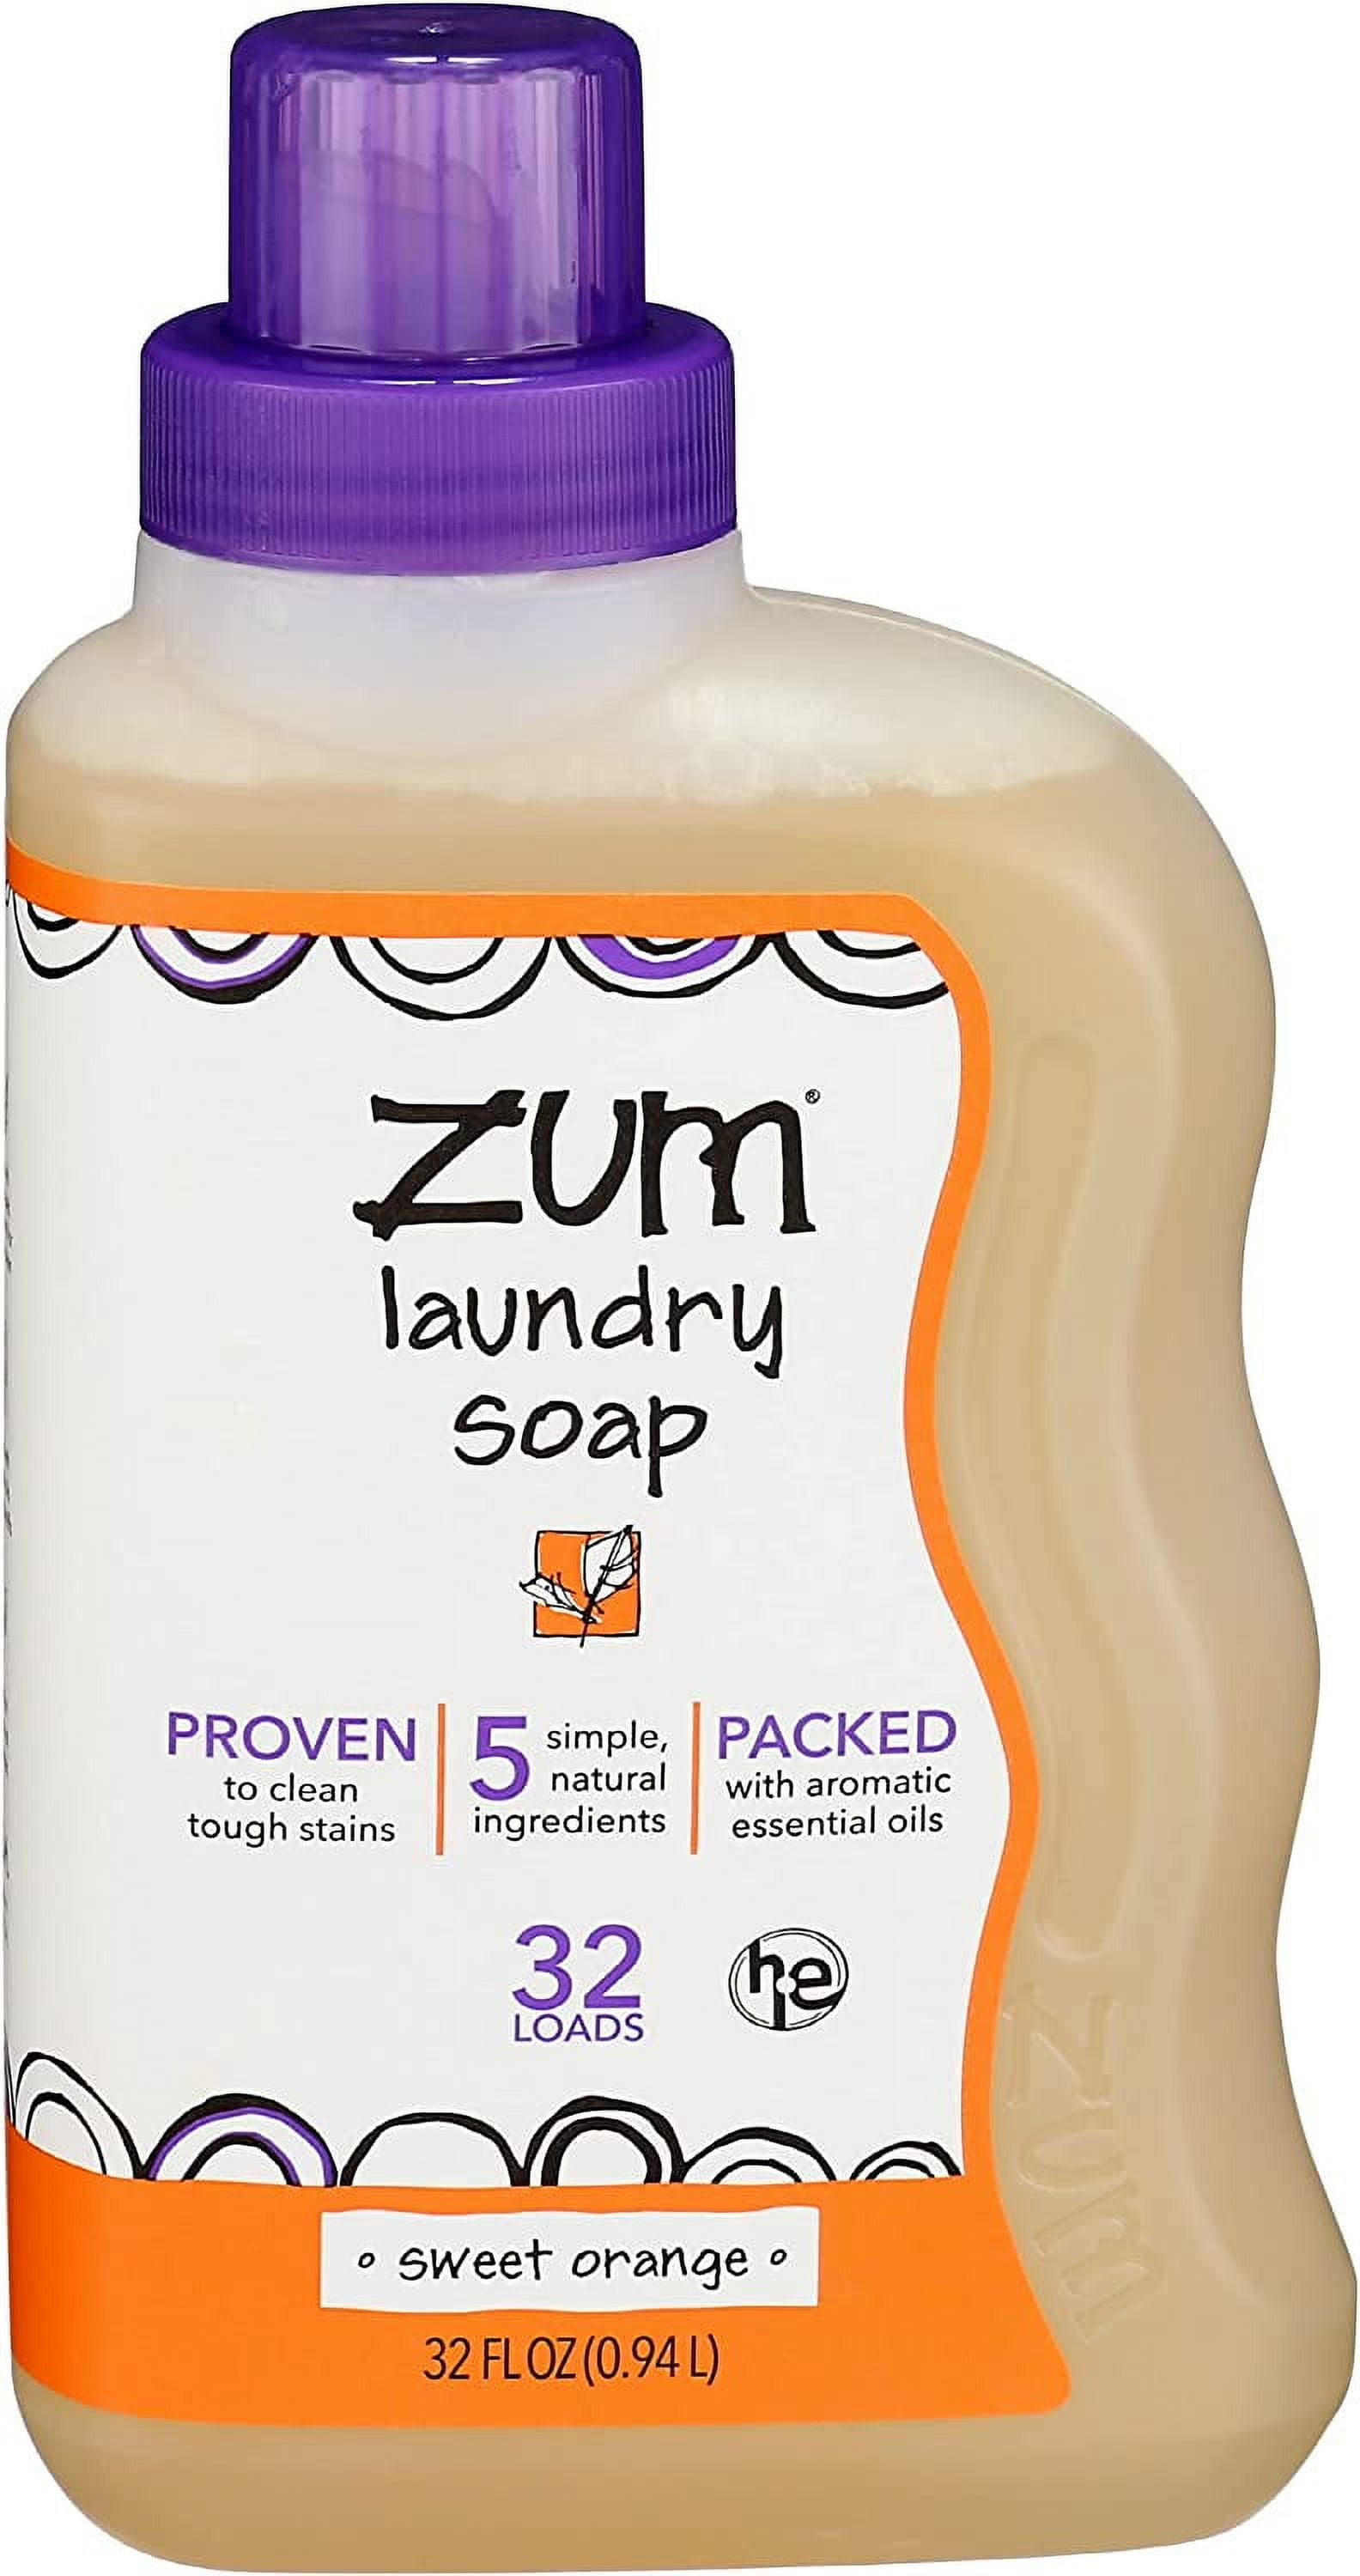 Sweet & Sassy Orange Liquid Soap – living simply soap